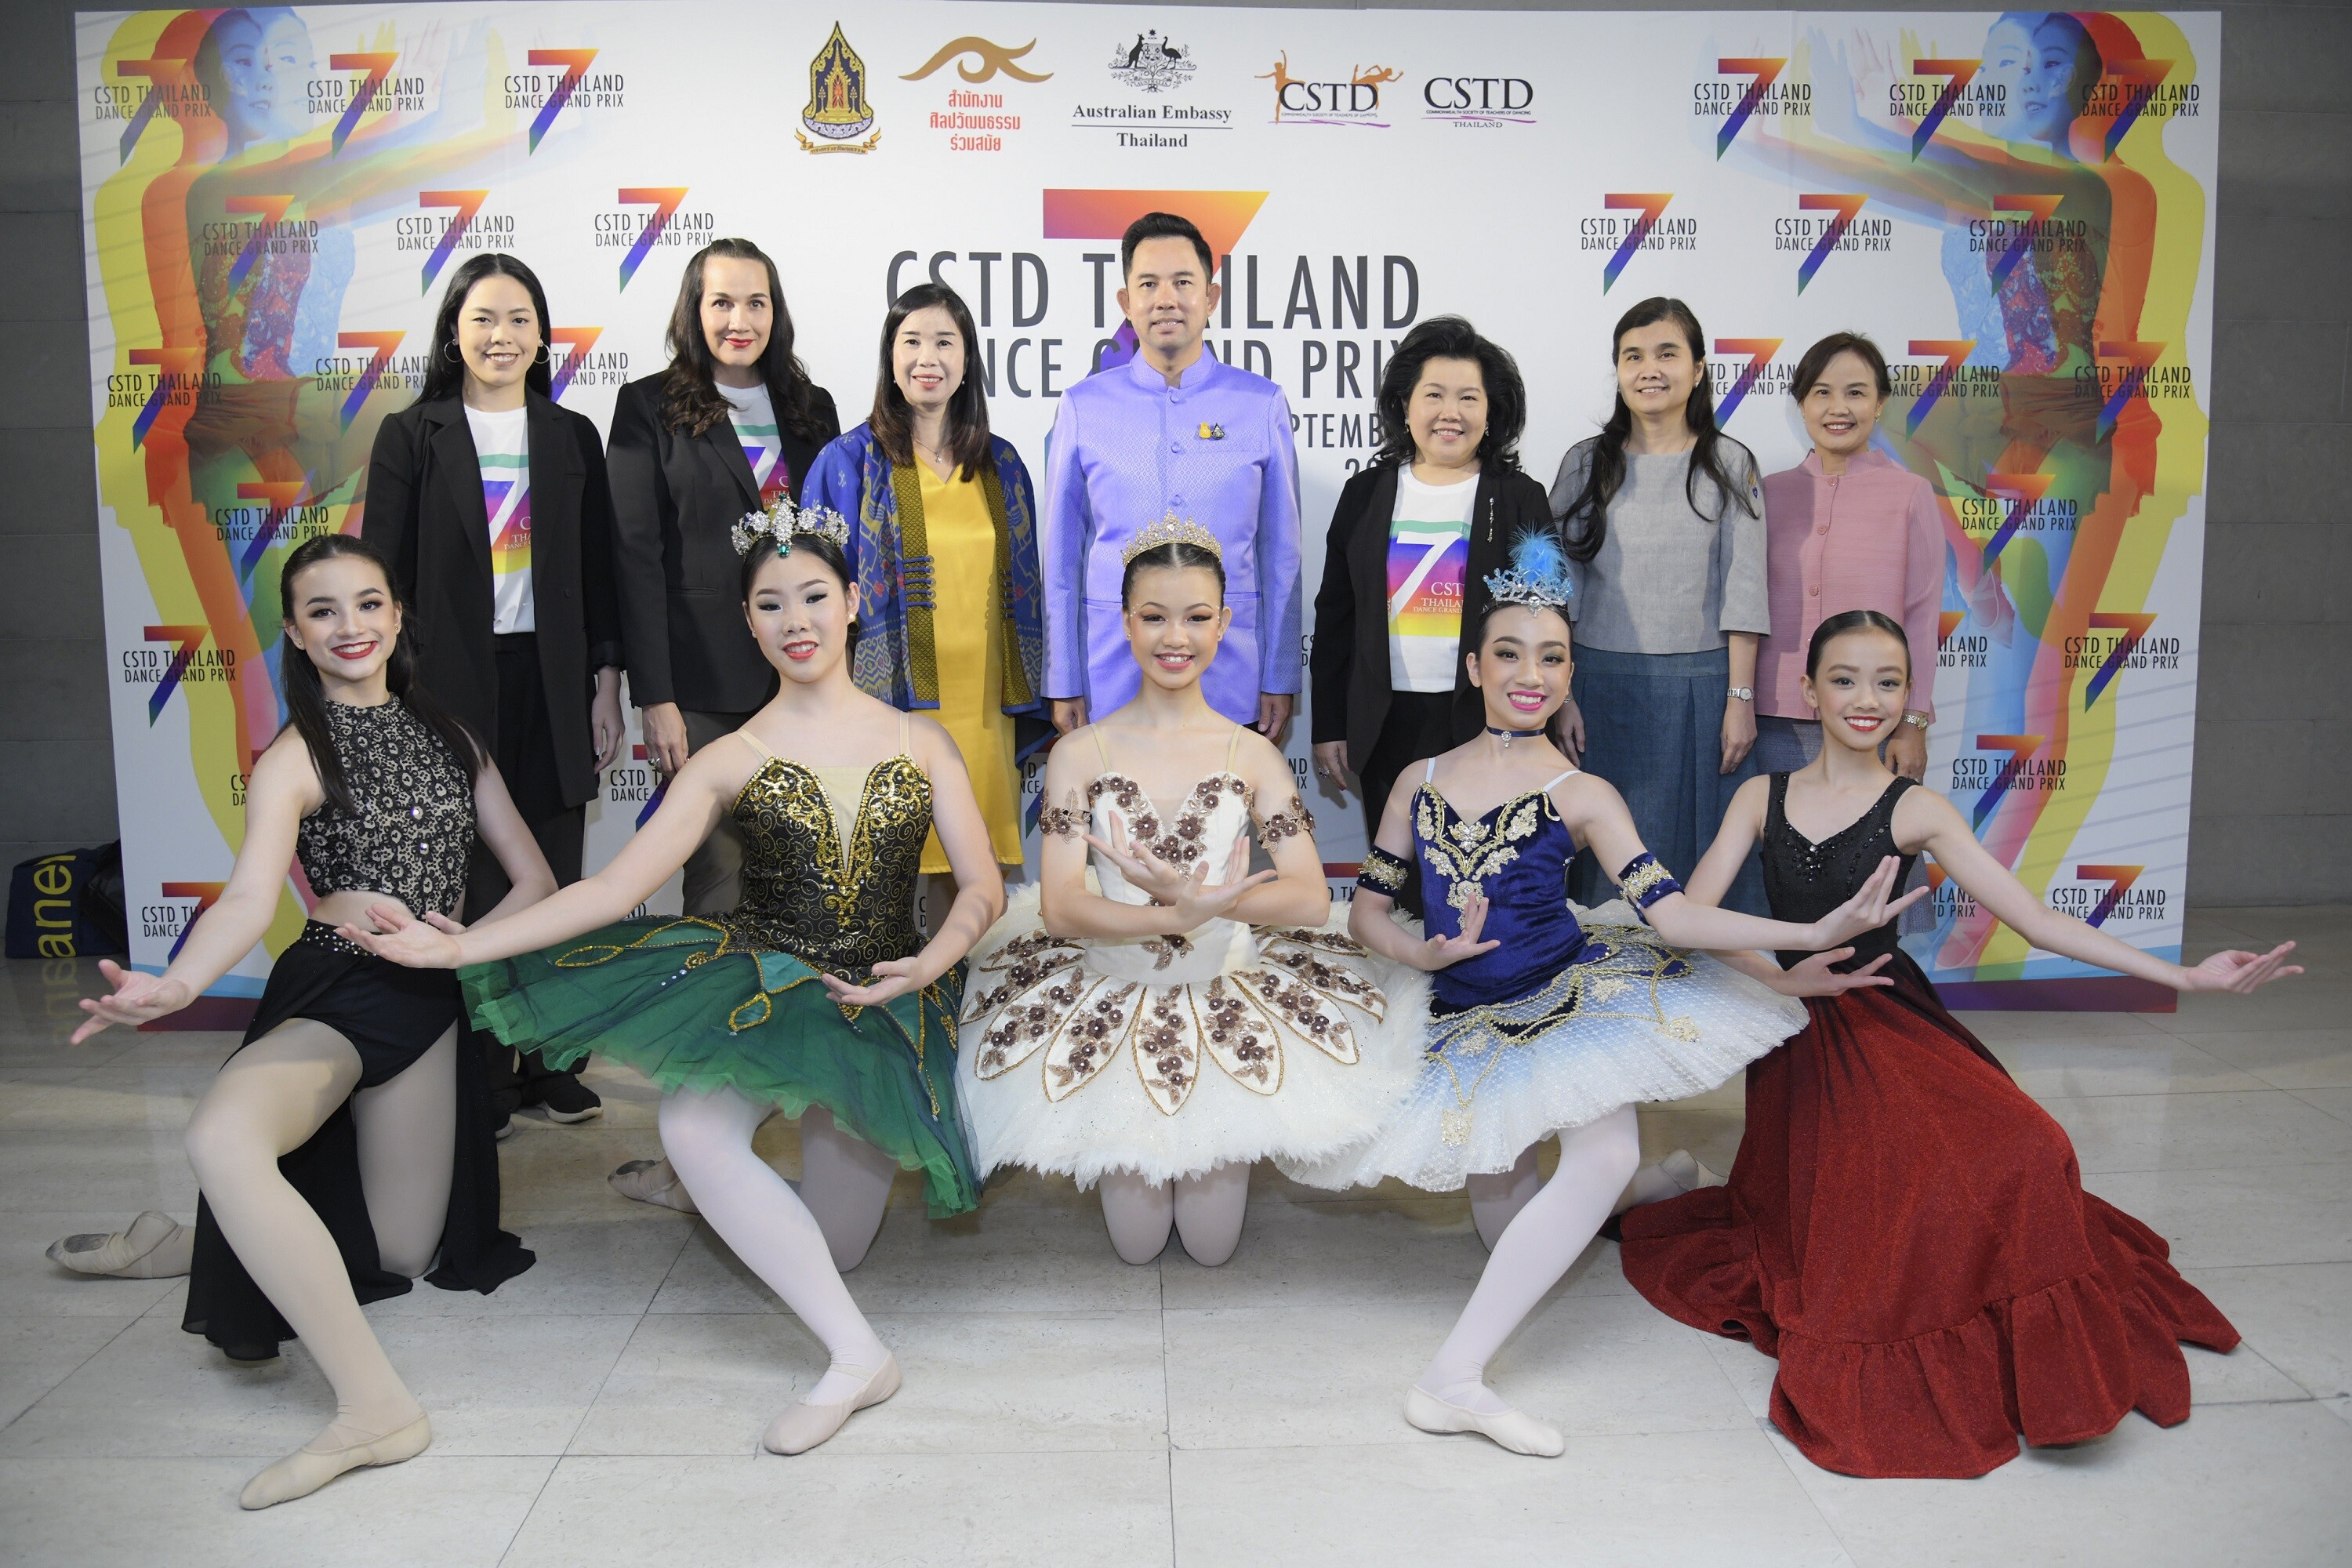 CSTD ประเทศไทย ร่วมกับกระทรวงวัฒนธรรม จัดงาน 7th CSTD Thailand Dance Grand Prix 2020  เวทีแข่งขันศิลปะการเต้นมาตรฐานสากลที่ใหญ่ที่สุดในประเทศไทย